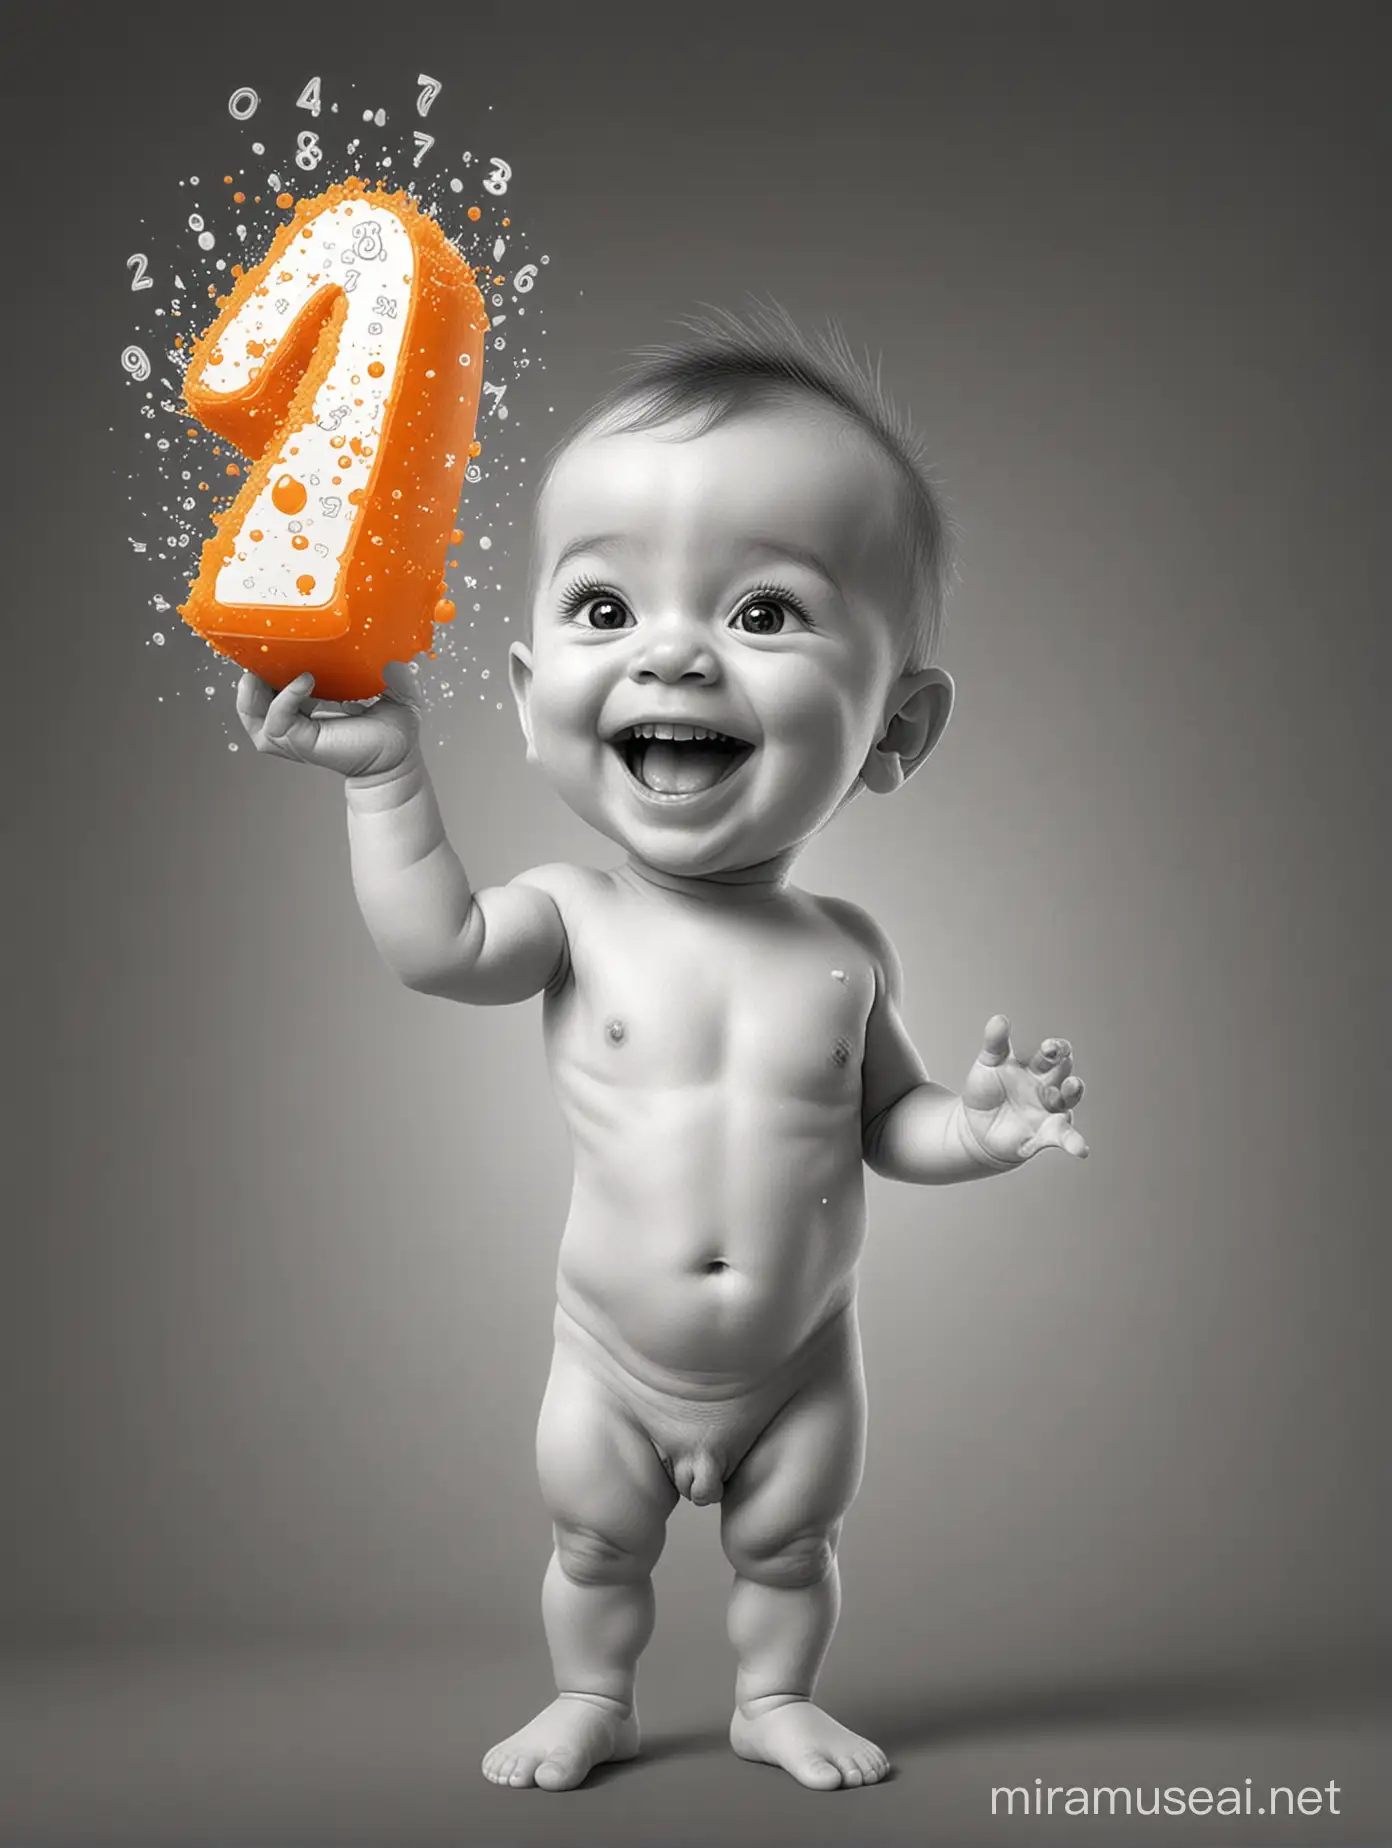 Joyful Baby Holding Number 49 in Monochrome Cartoon Style